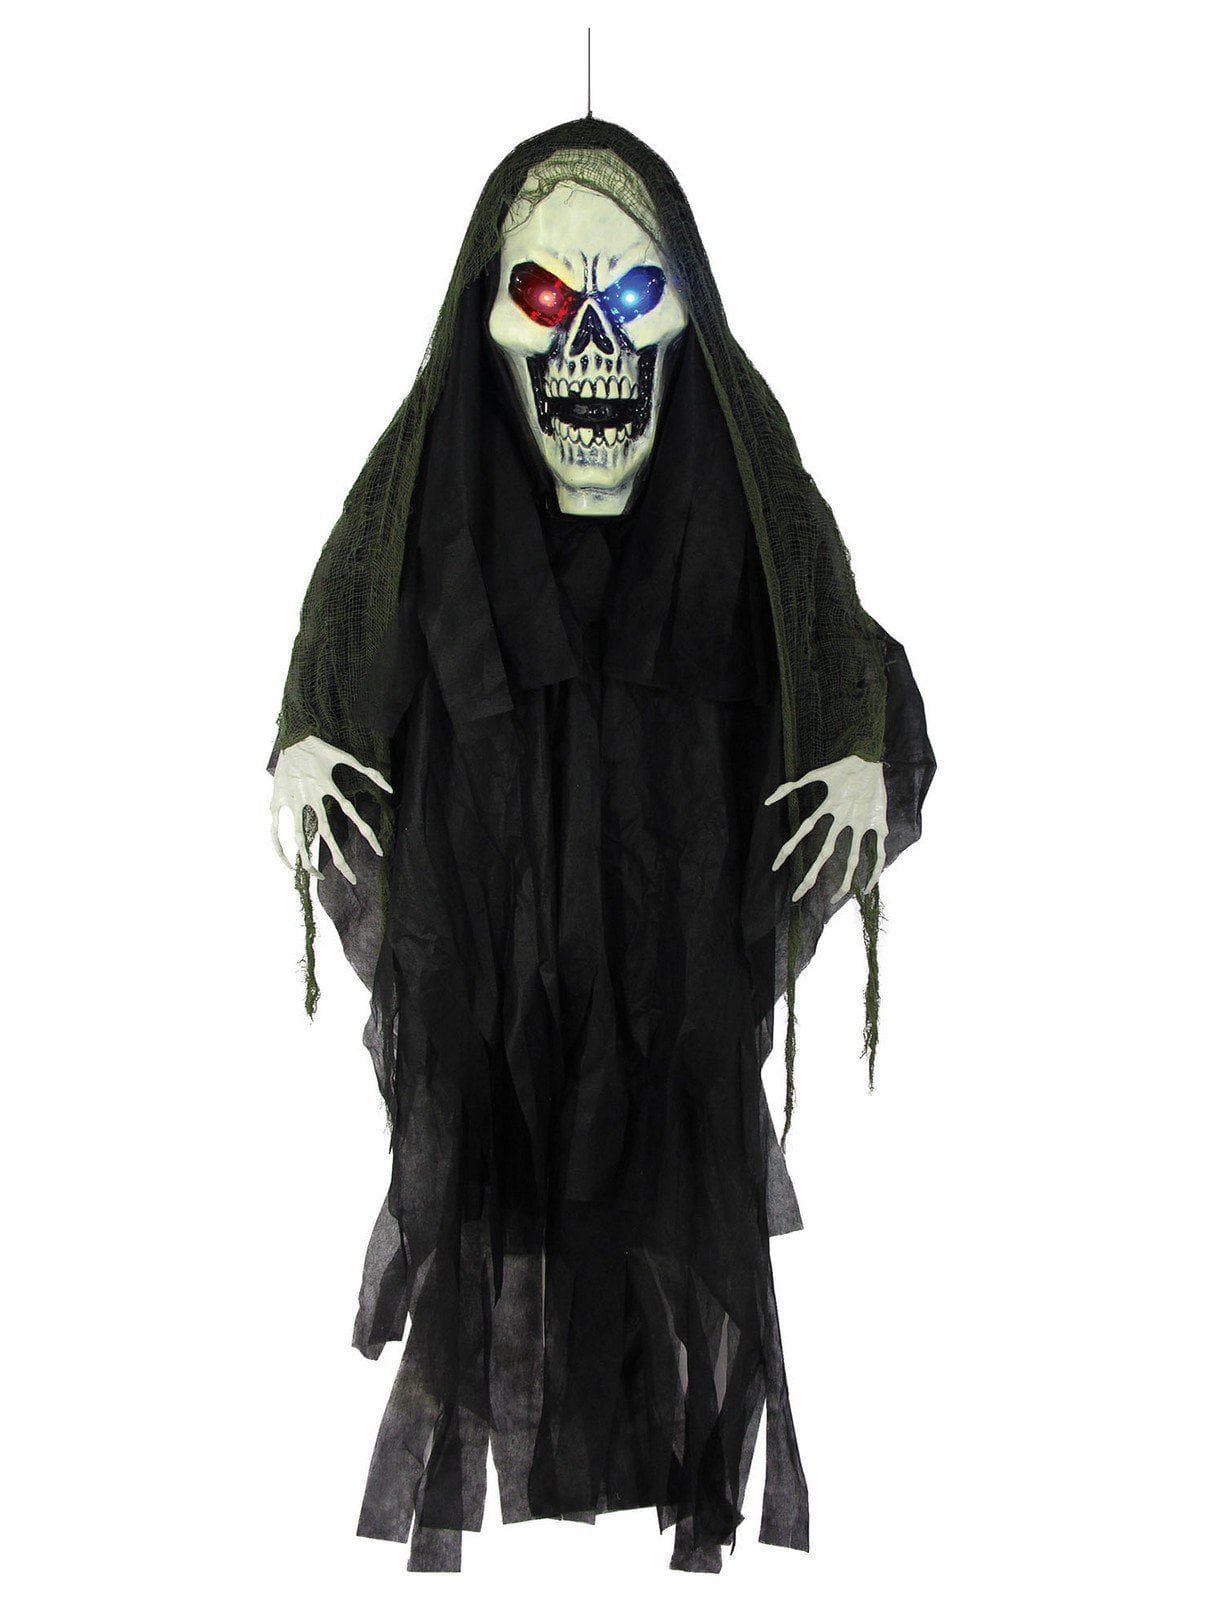 6 Foot Giant Hanging Grim Reaper - costumes.com